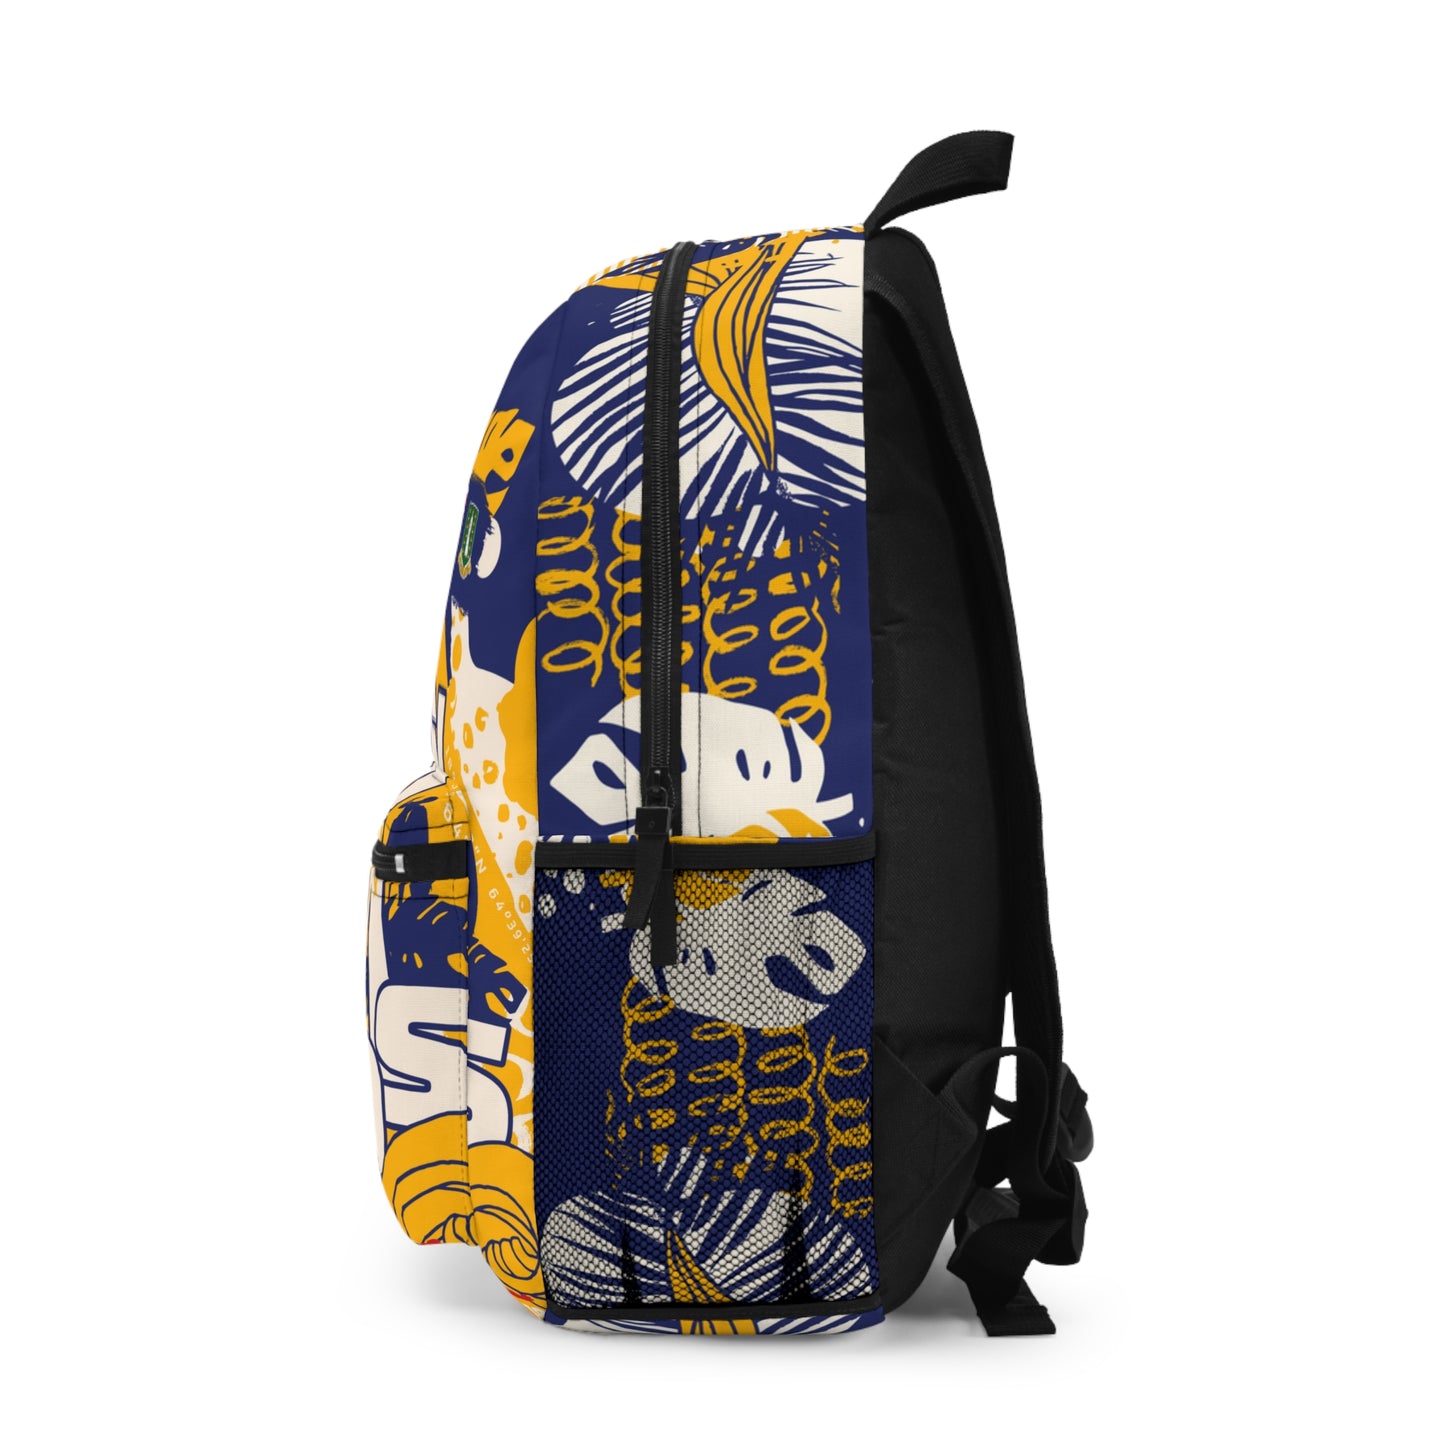 "BVI - For Island Life" (Flag Blue) Backpack